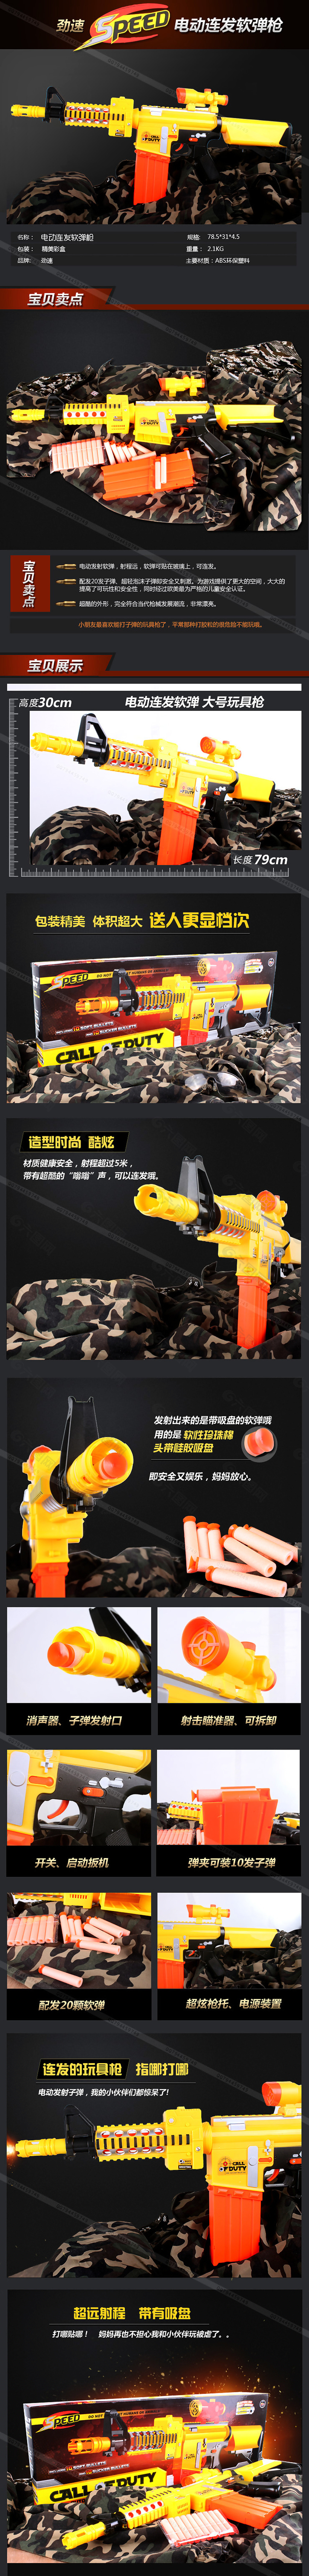 DC阿里巴巴详情页制作之澄海玩具之冲锋枪